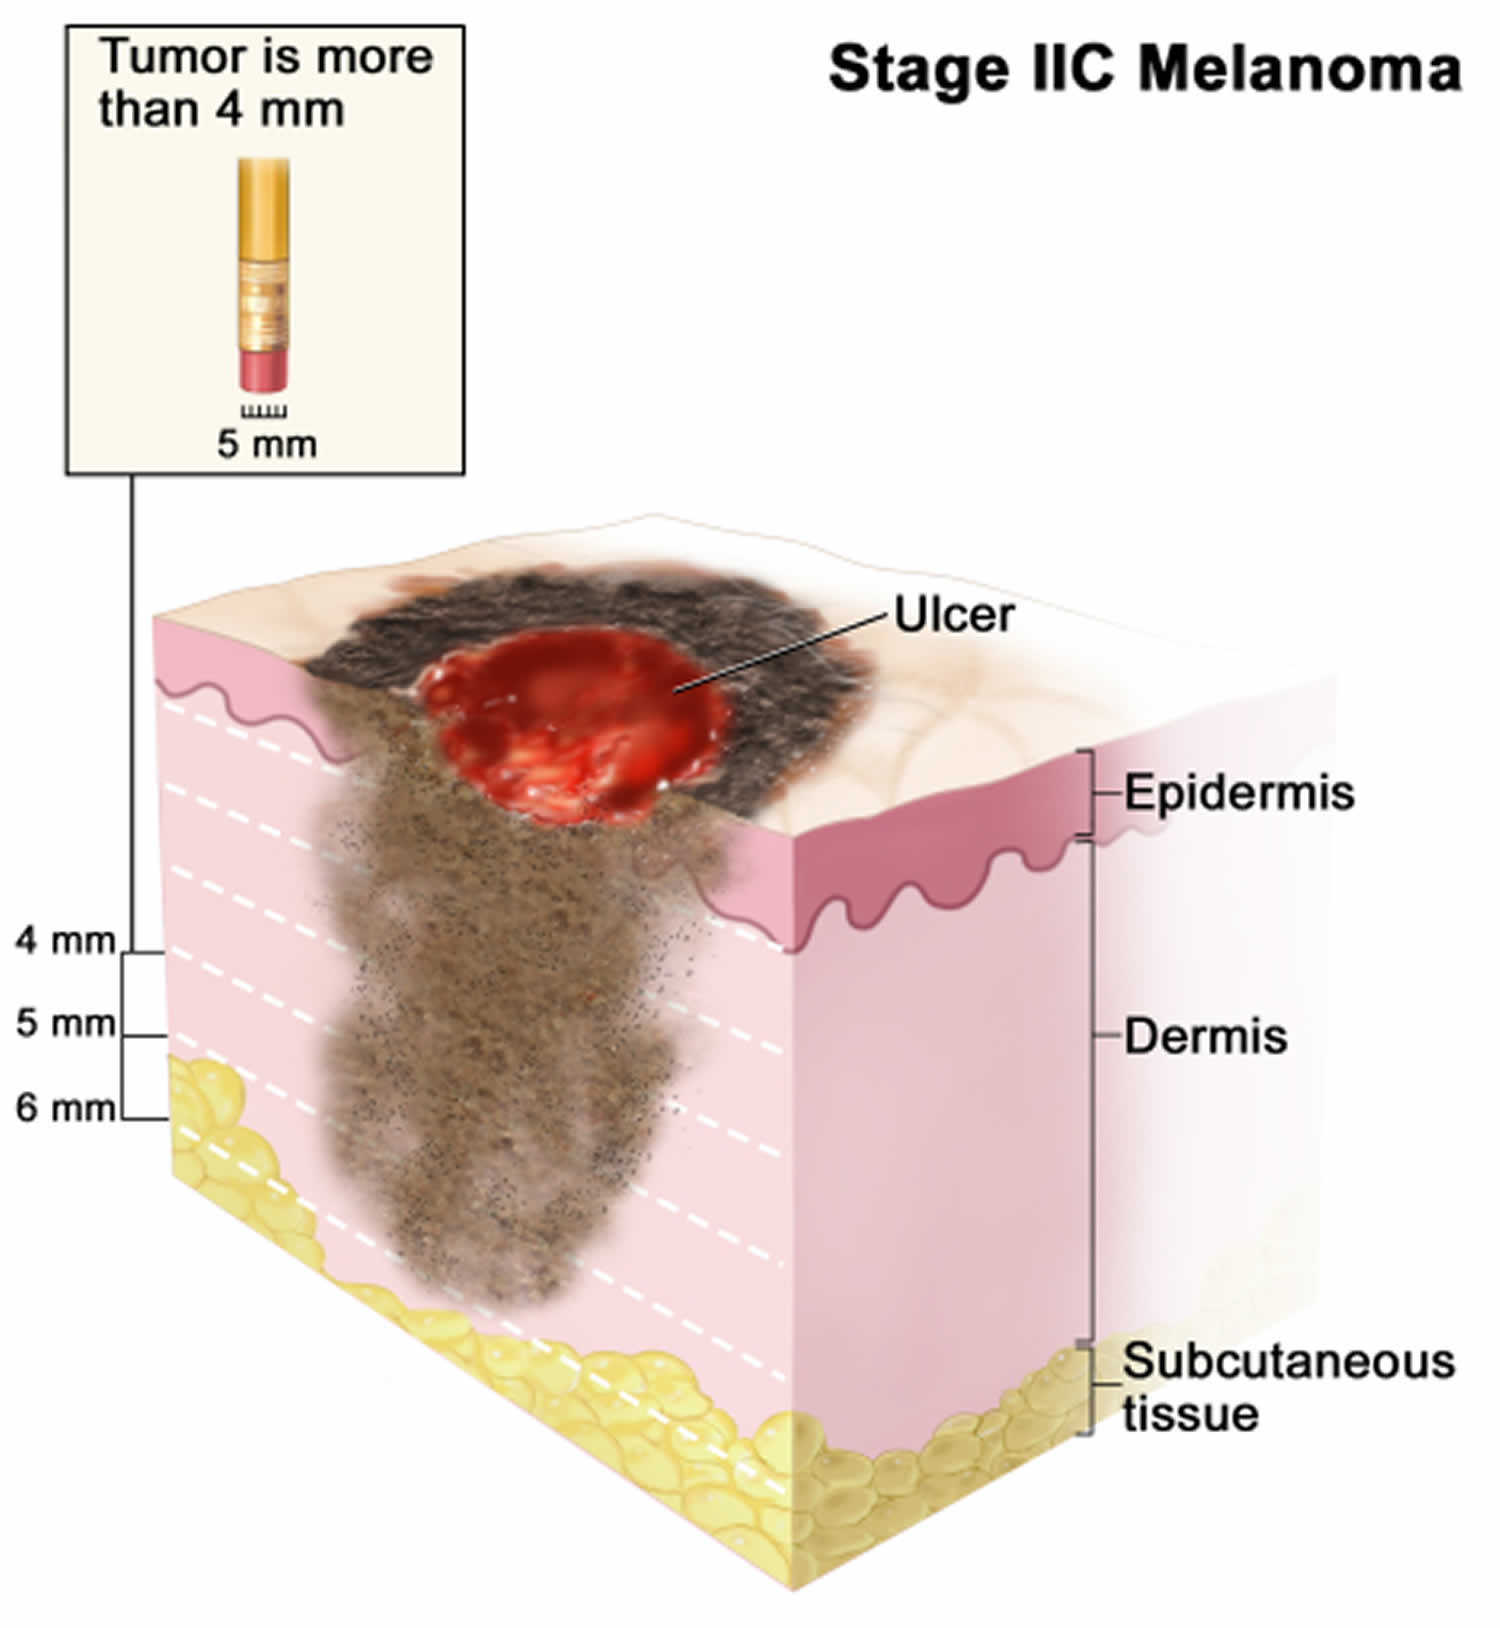 Stage 2C melanoma